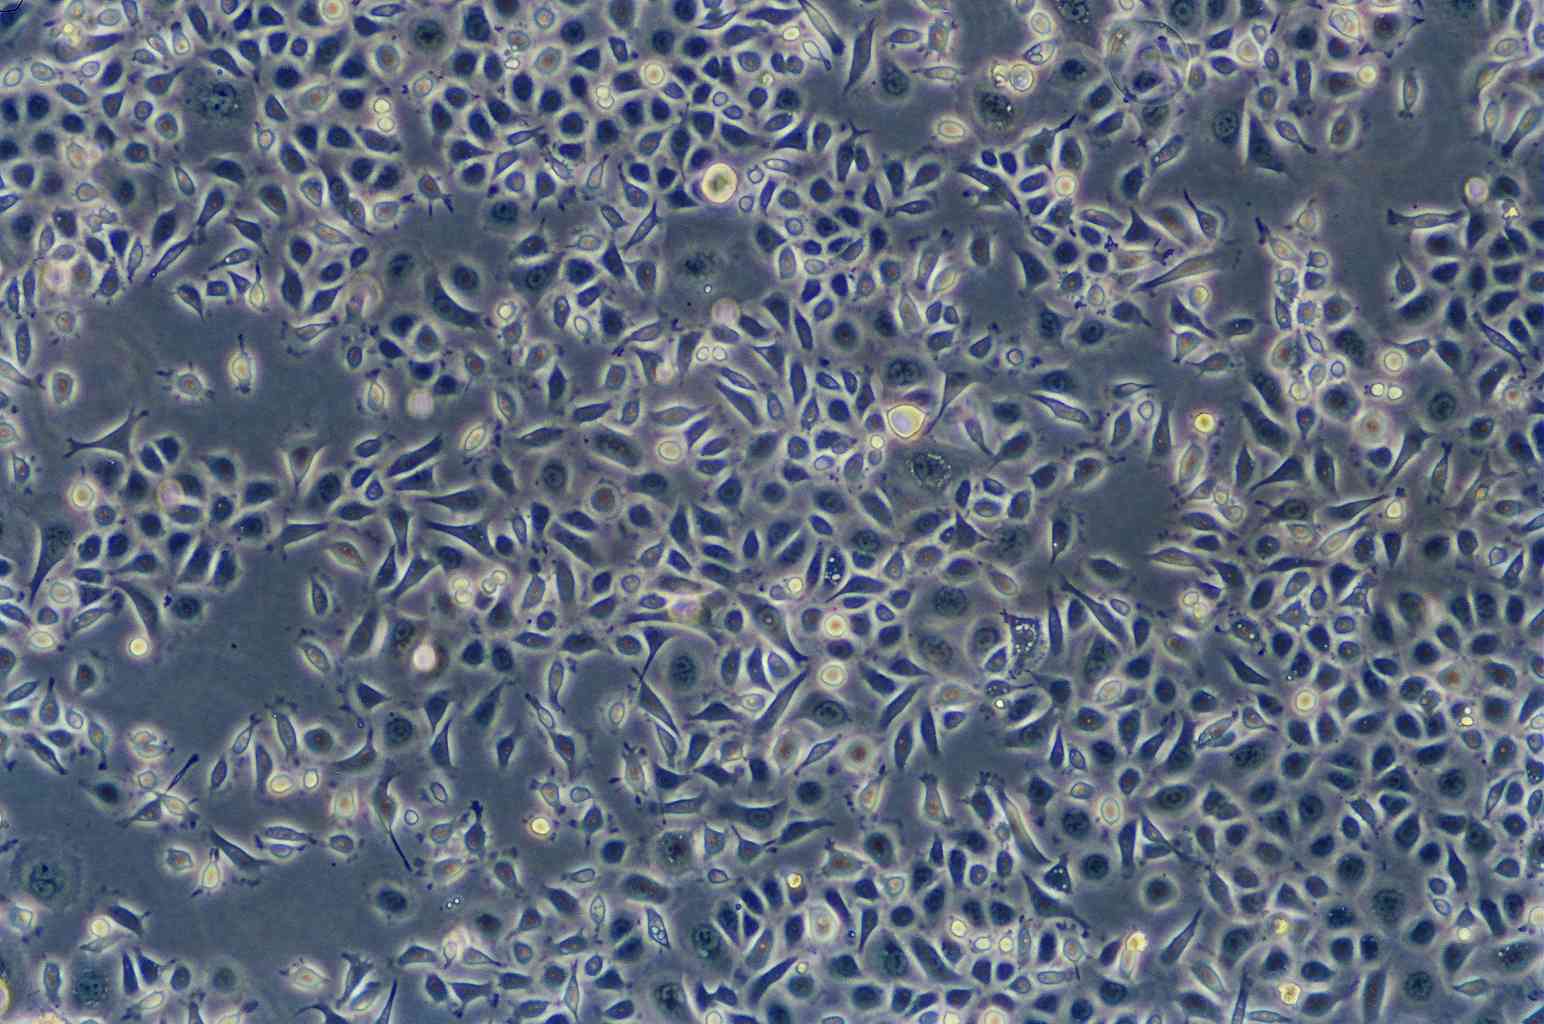 FD-LSC-1 epithelioid cells人喉鳞癌细胞系